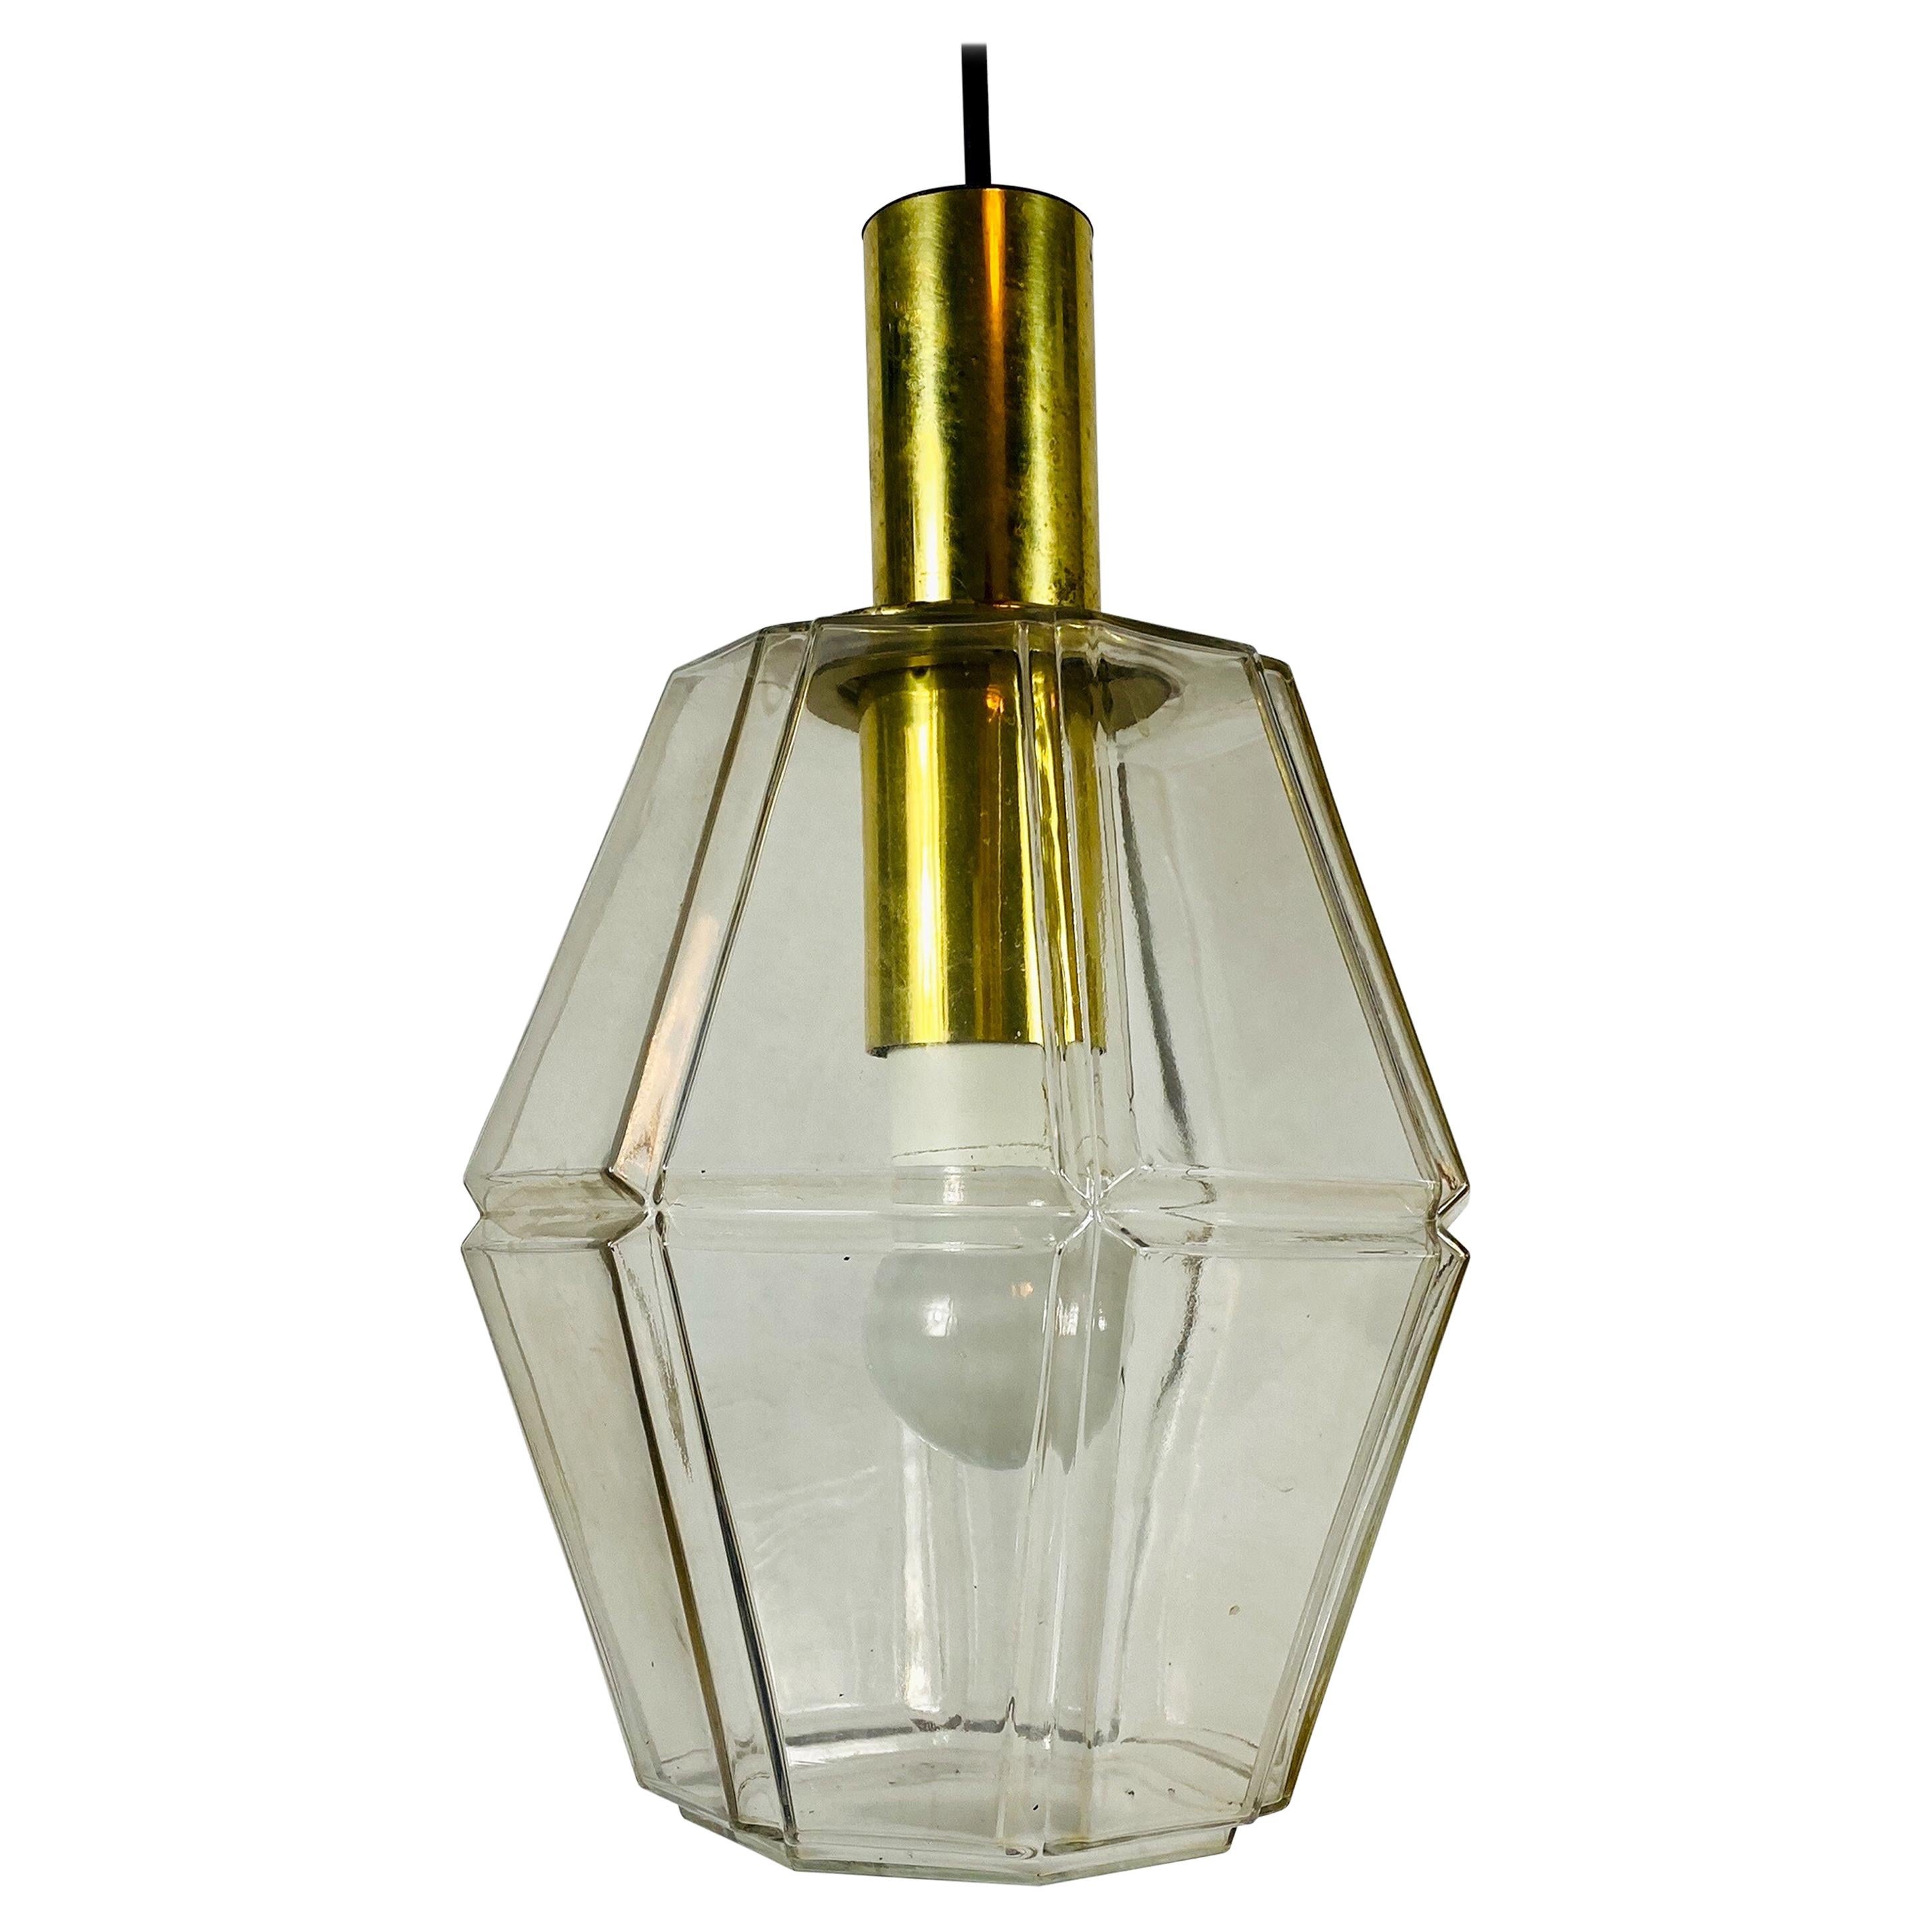 Midcentury Brass and Glass Pendant Lamp by Glashütte Limburg, 1960s For Sale